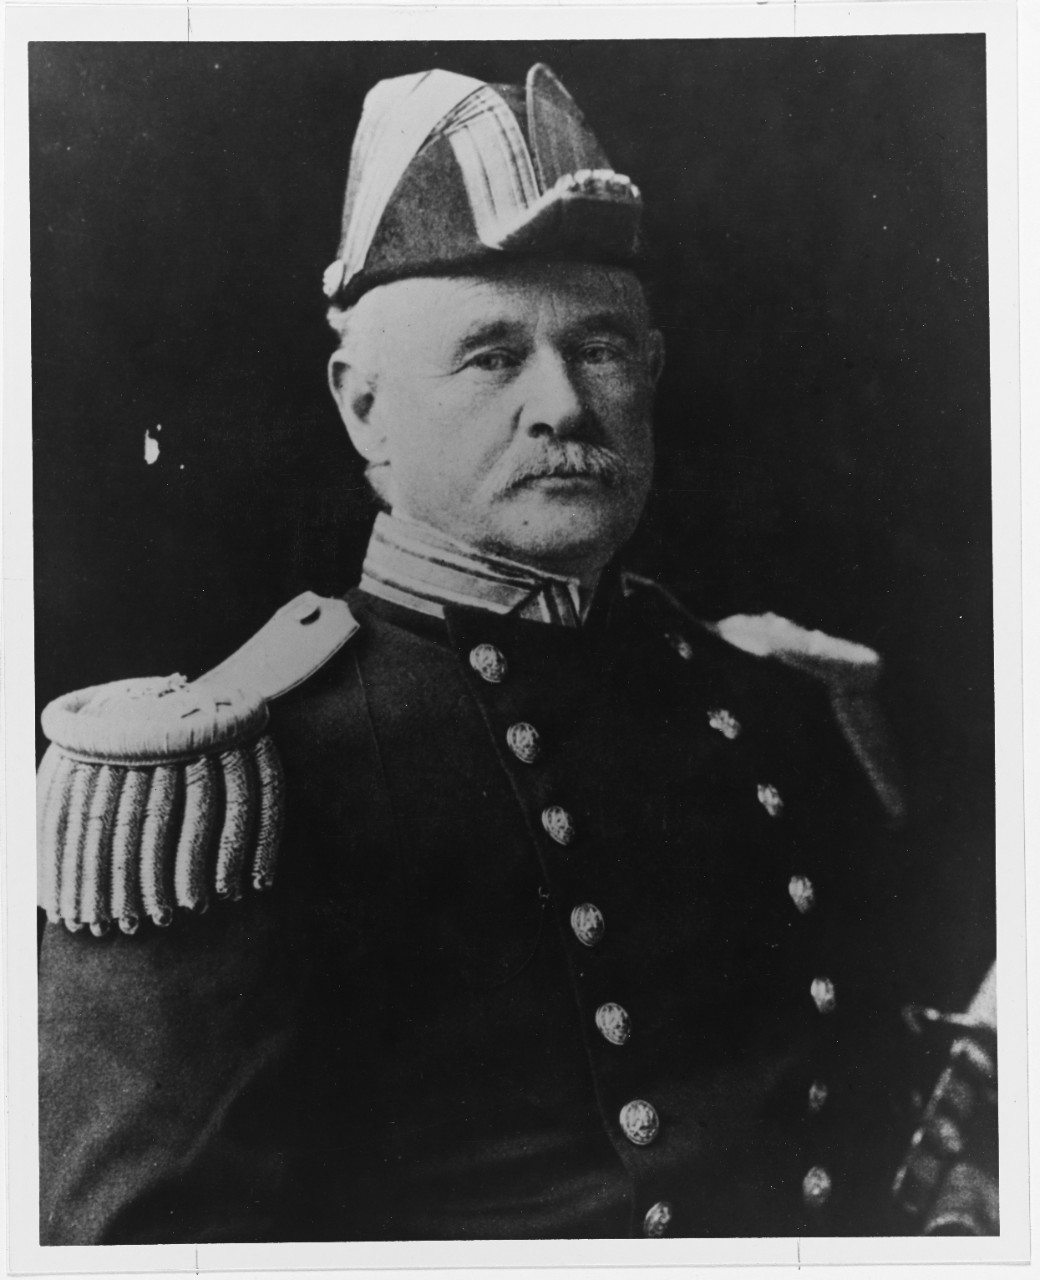 NH 43951 Rear Admiral Henry C. Taylor, USN